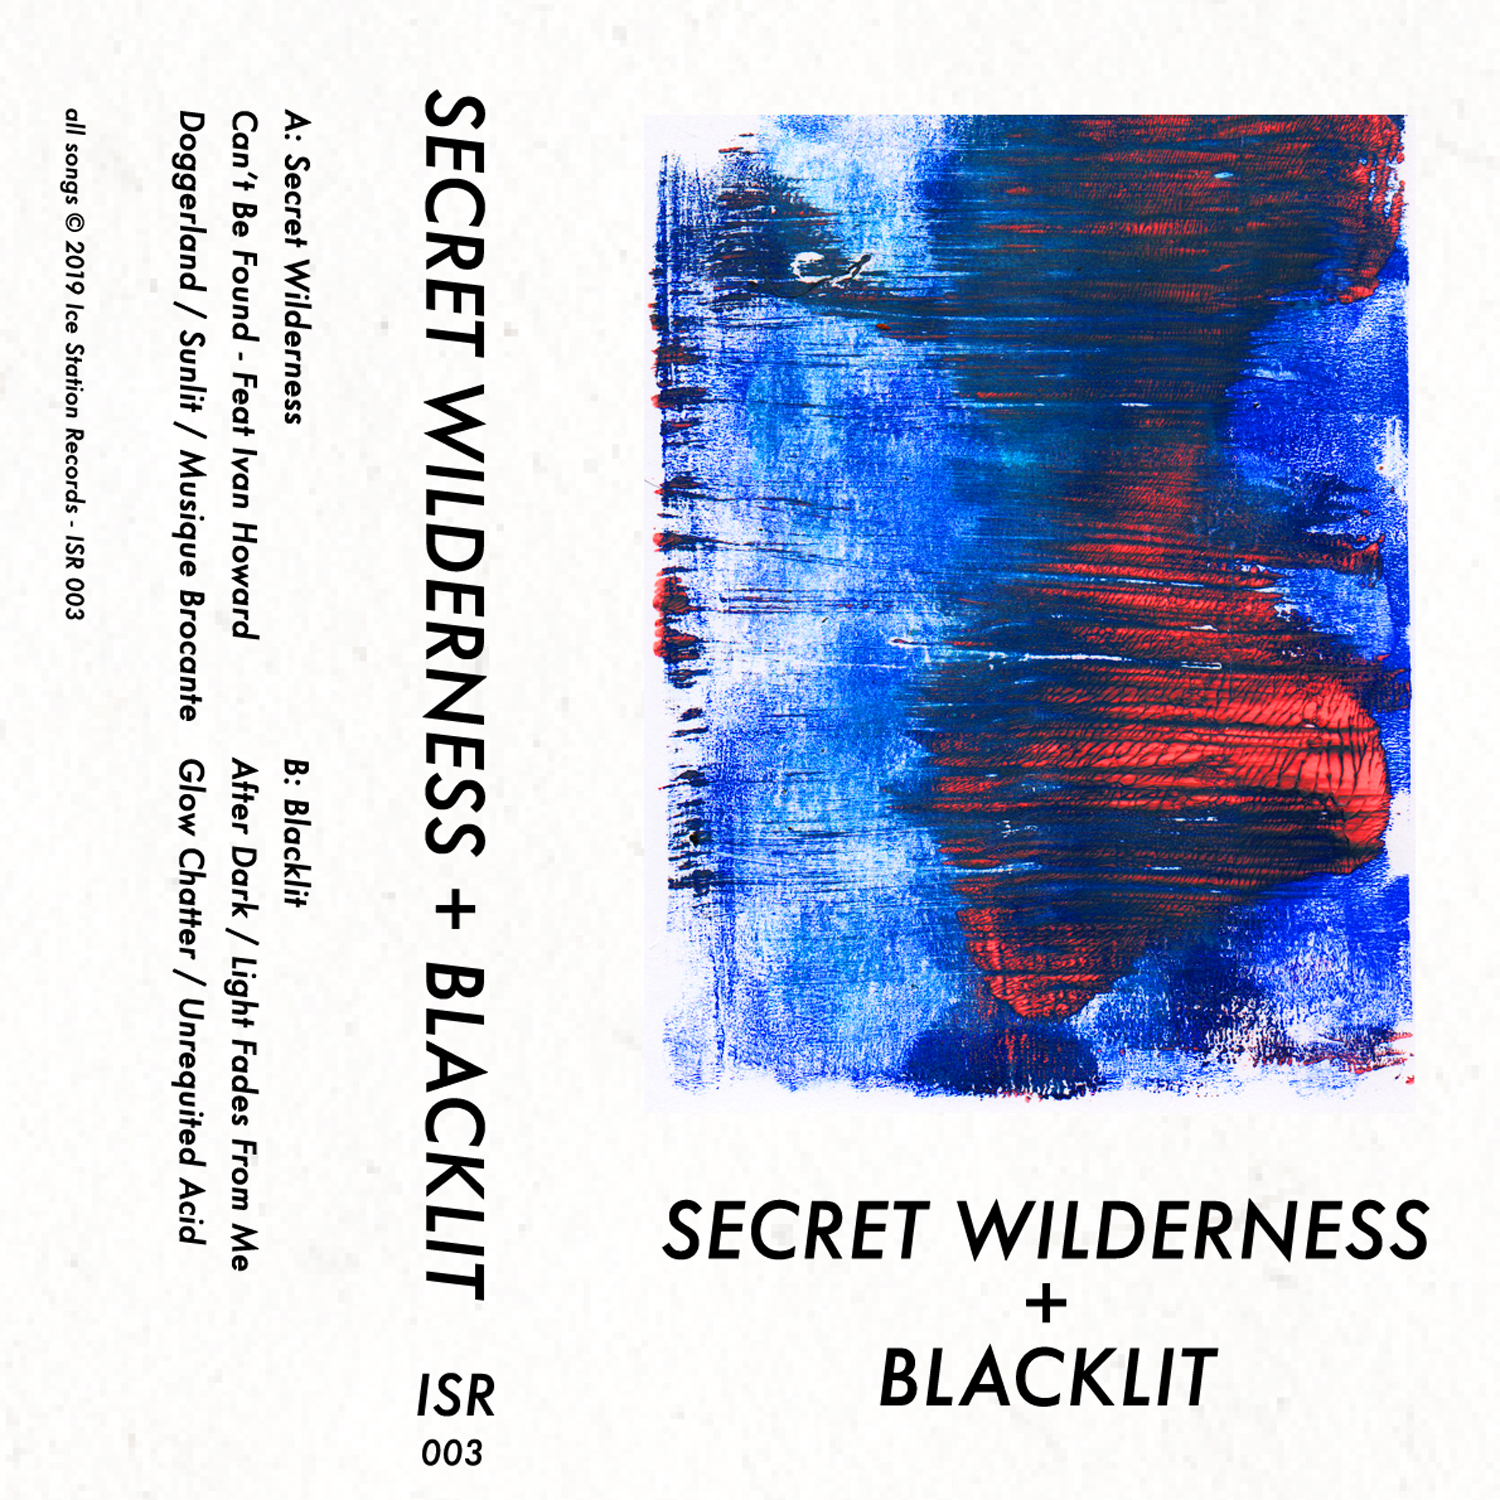 Secret Wilderness + Blacklit cassette cover